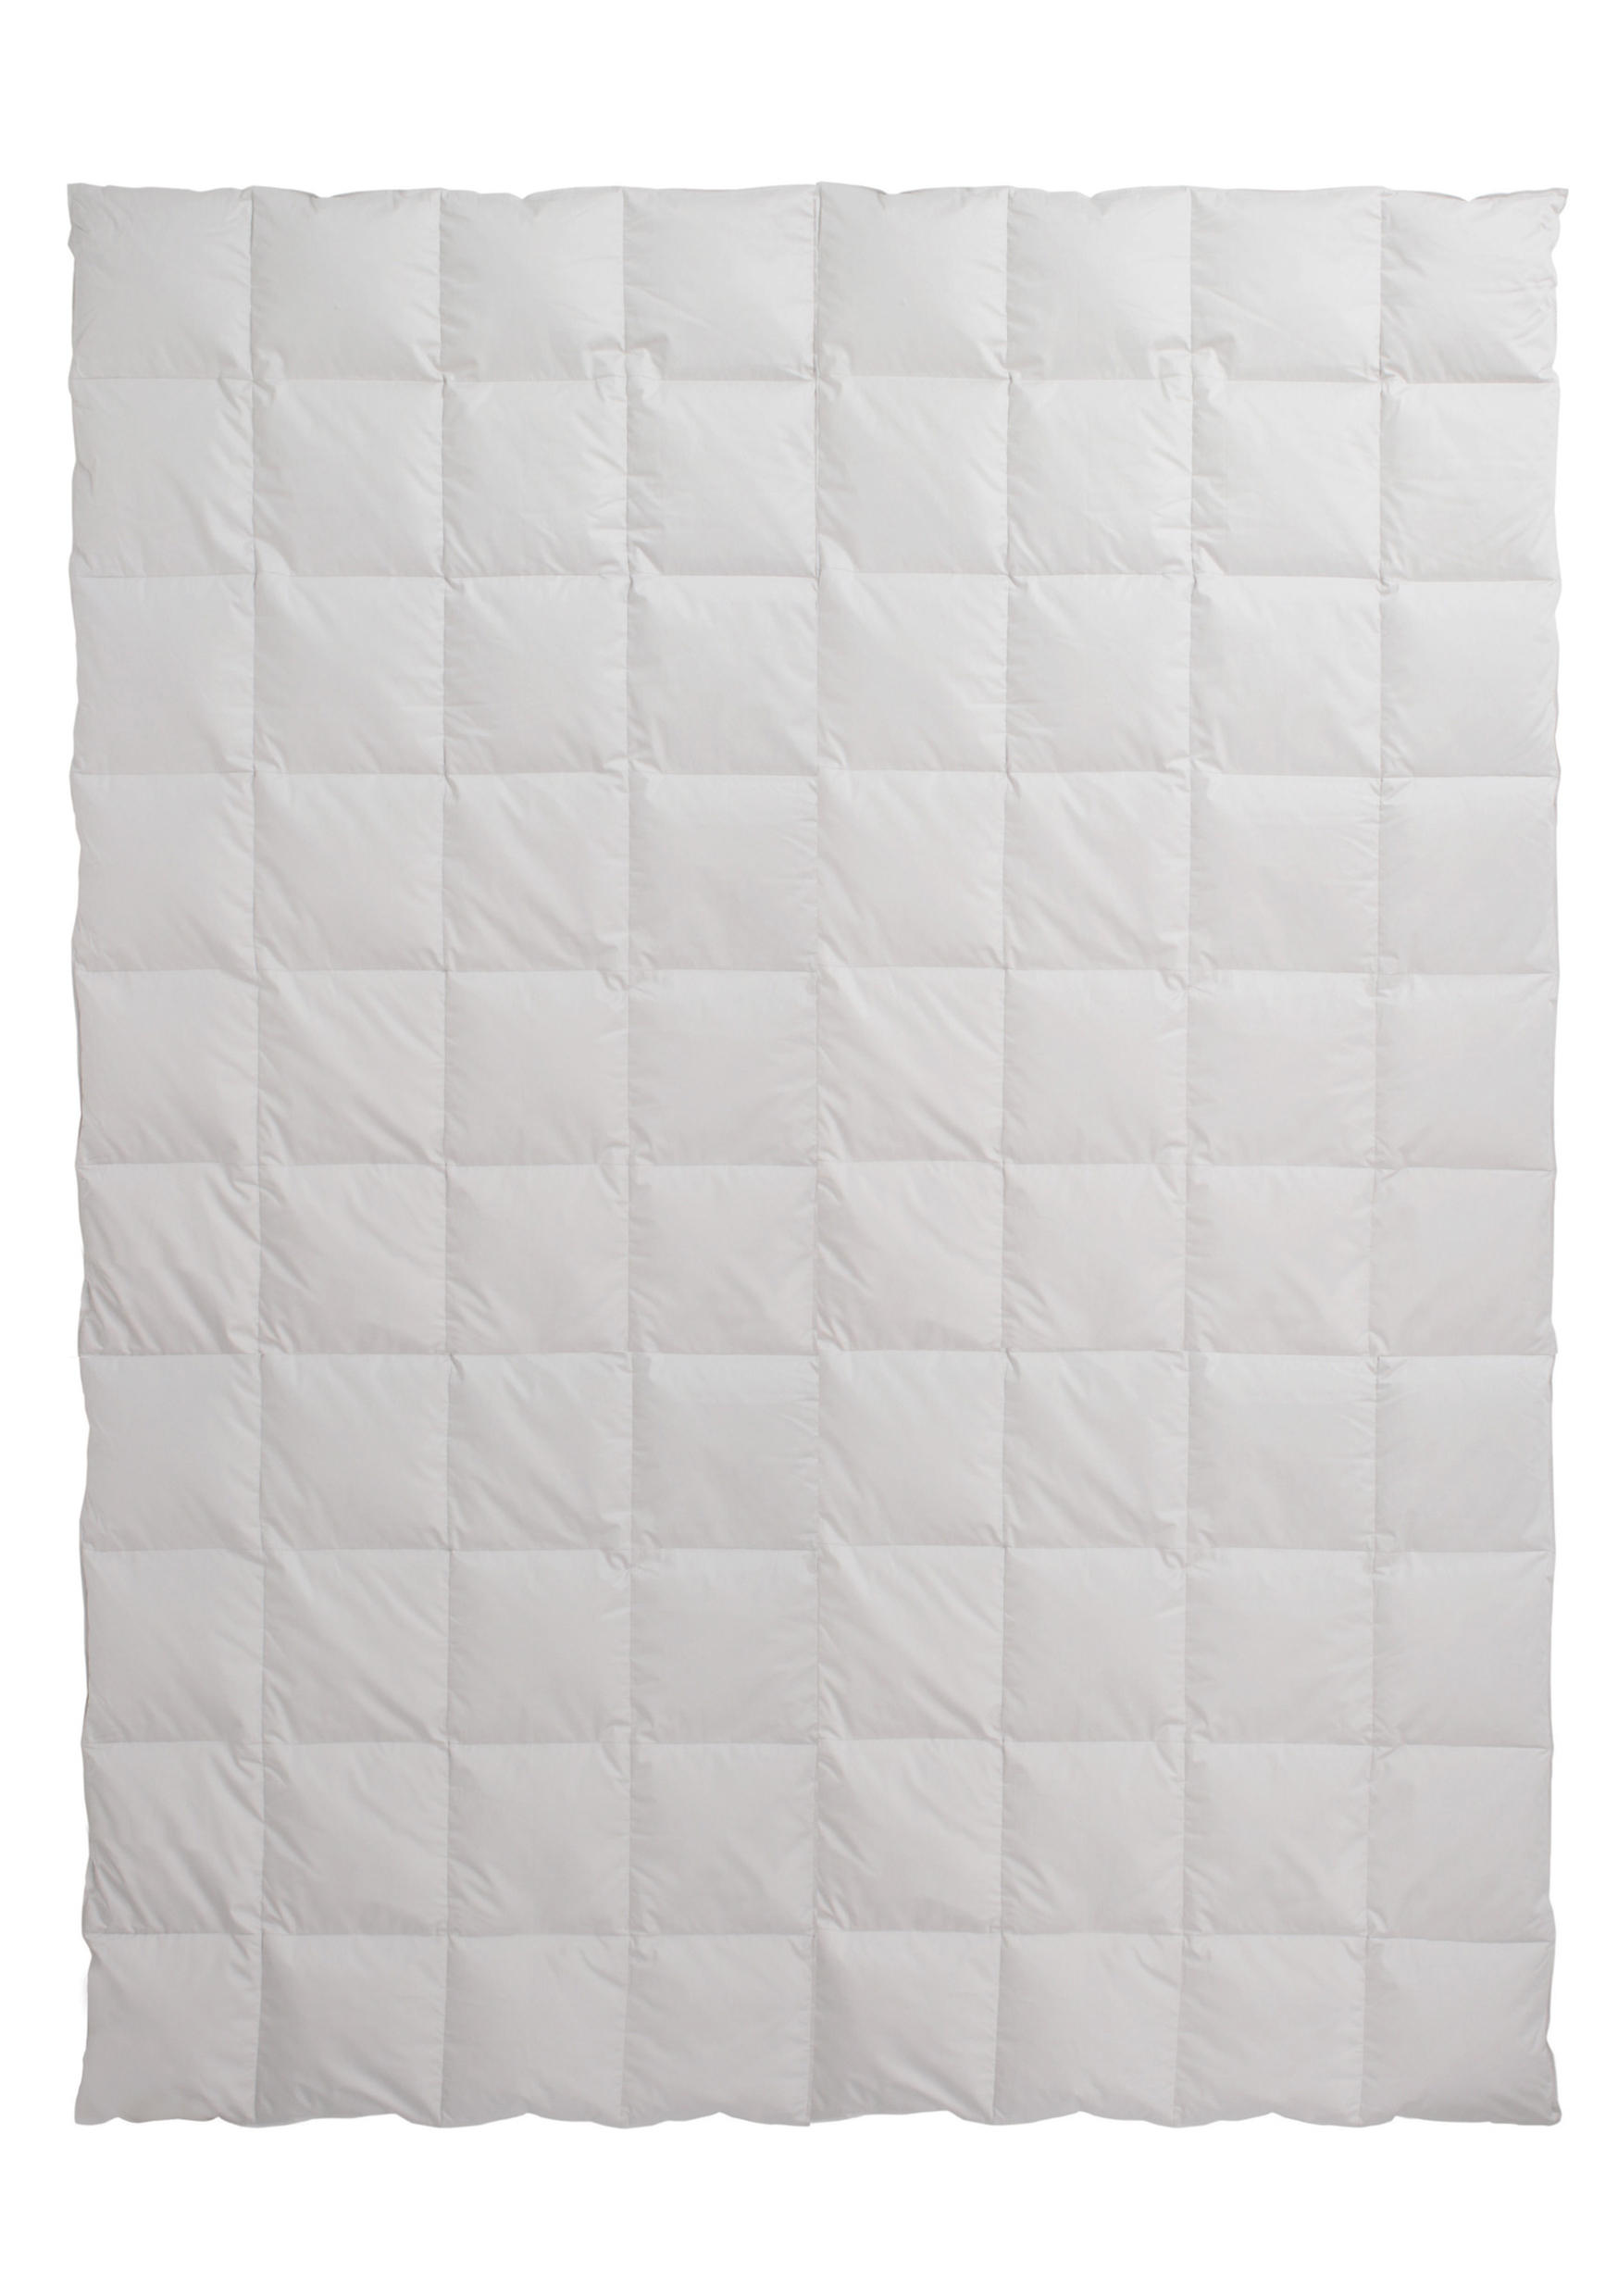 DAUNENDECKE  Ambiente  135/200 cm   - Weiß, Basics, Textil (135/200cm) - Centa-Star